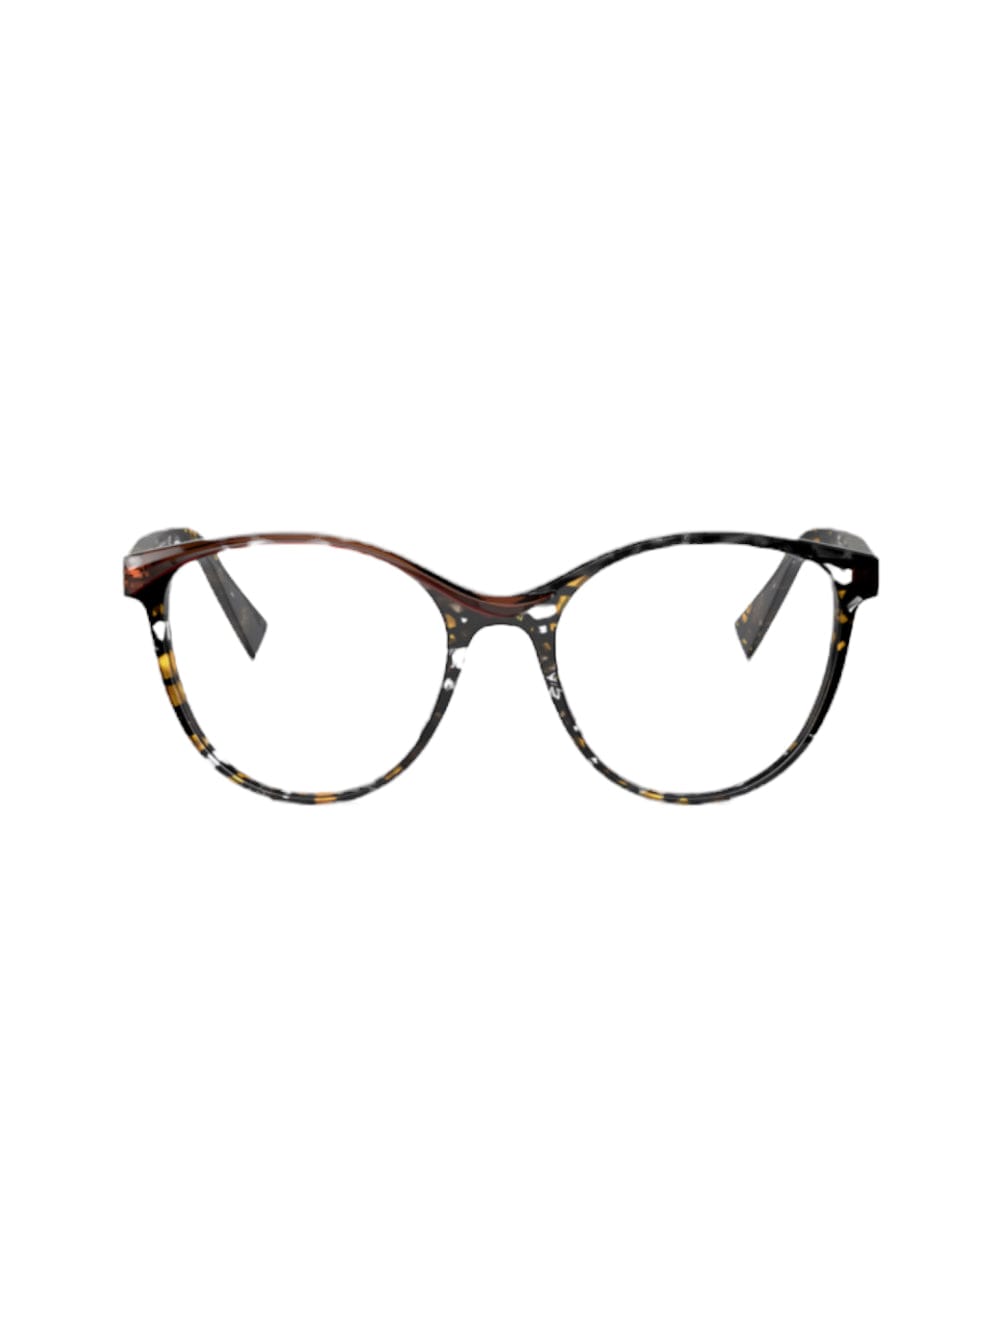 Alain Mikli Marzella - 3131 - Black/amber Glasses